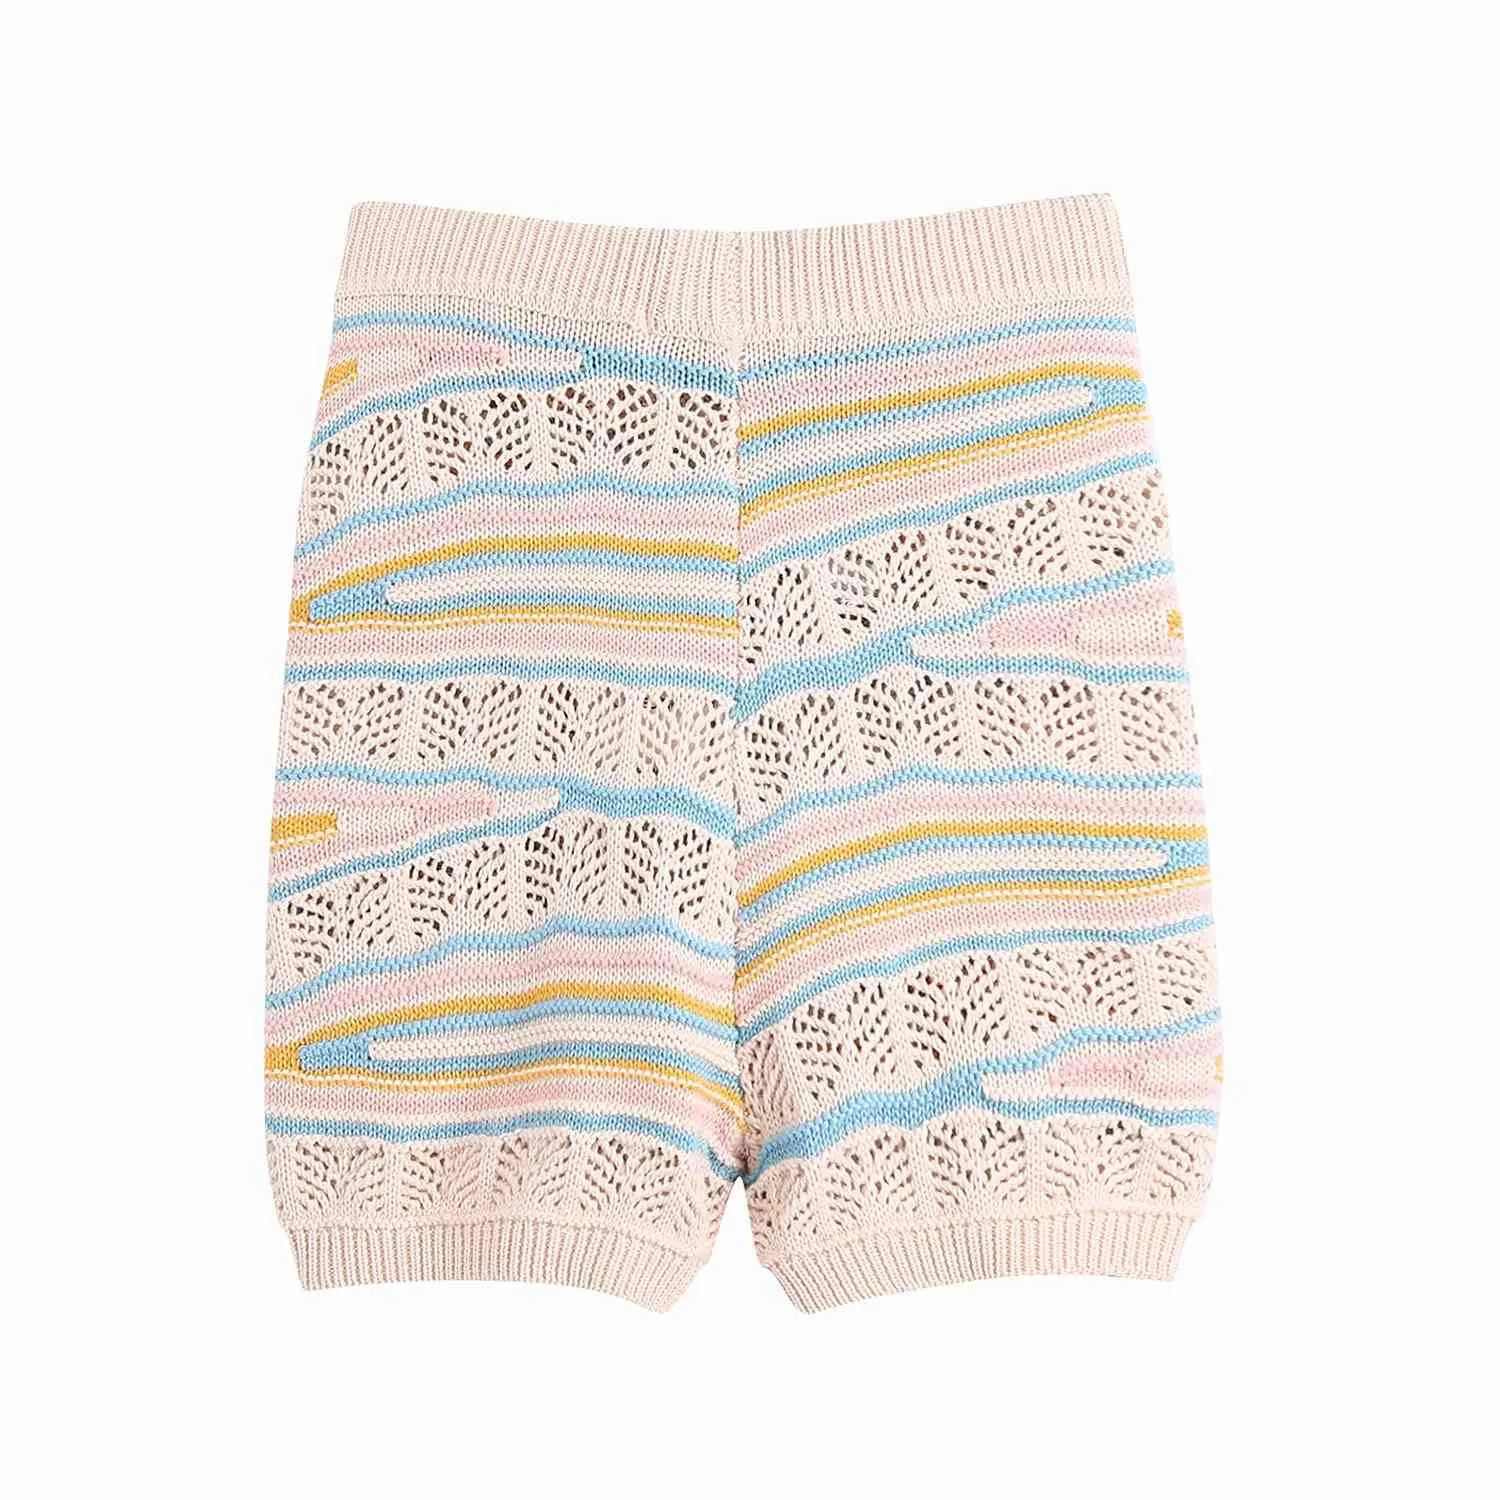 Hoge taille gebreide mesh stof zoete schoonheid sex shorts zomer harajuku chic sport vrouwen shorts 210507